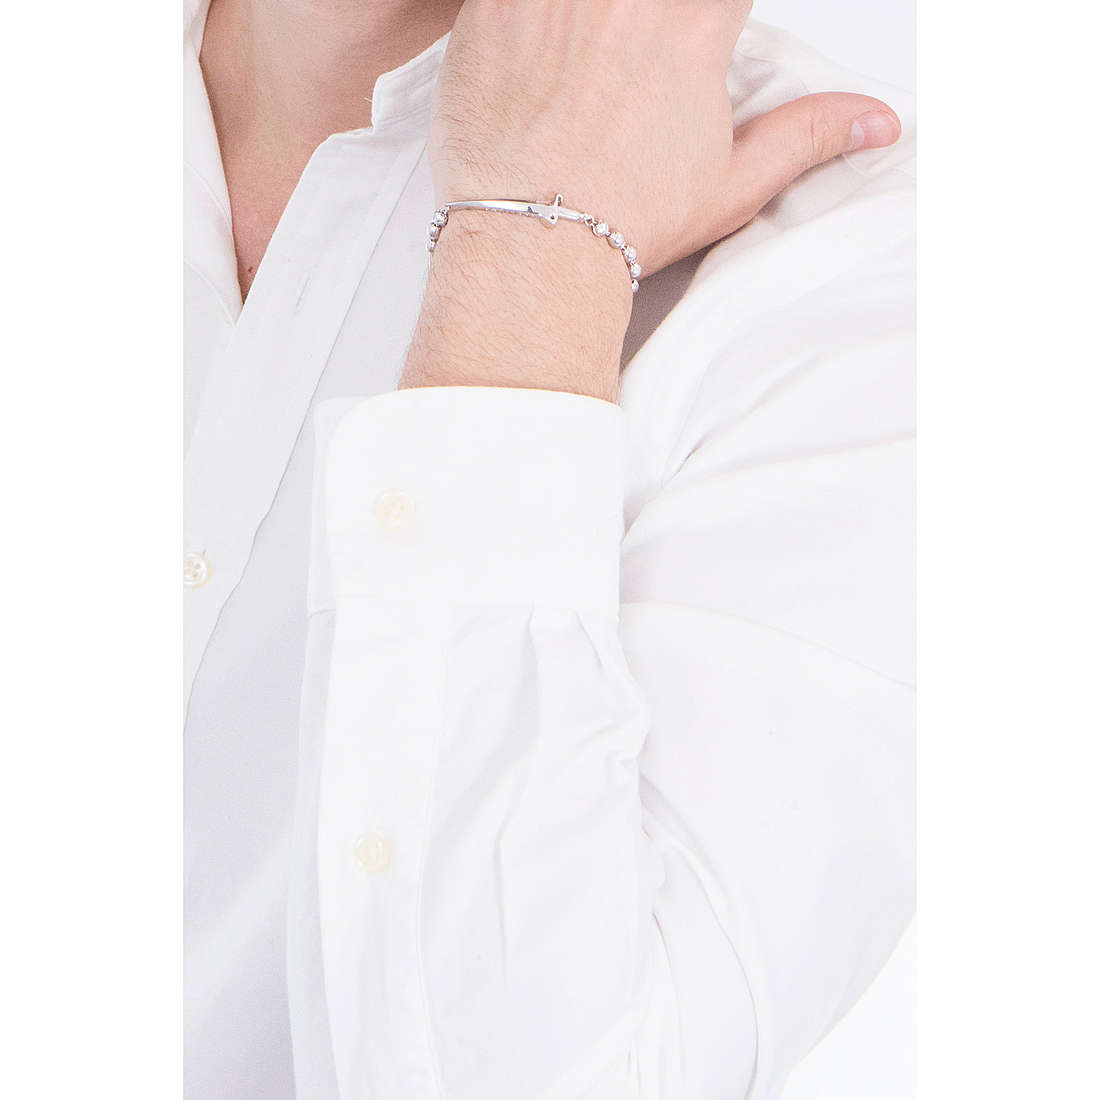 Cesare Paciotti bracelets Lateral man JPBR2009B wearing